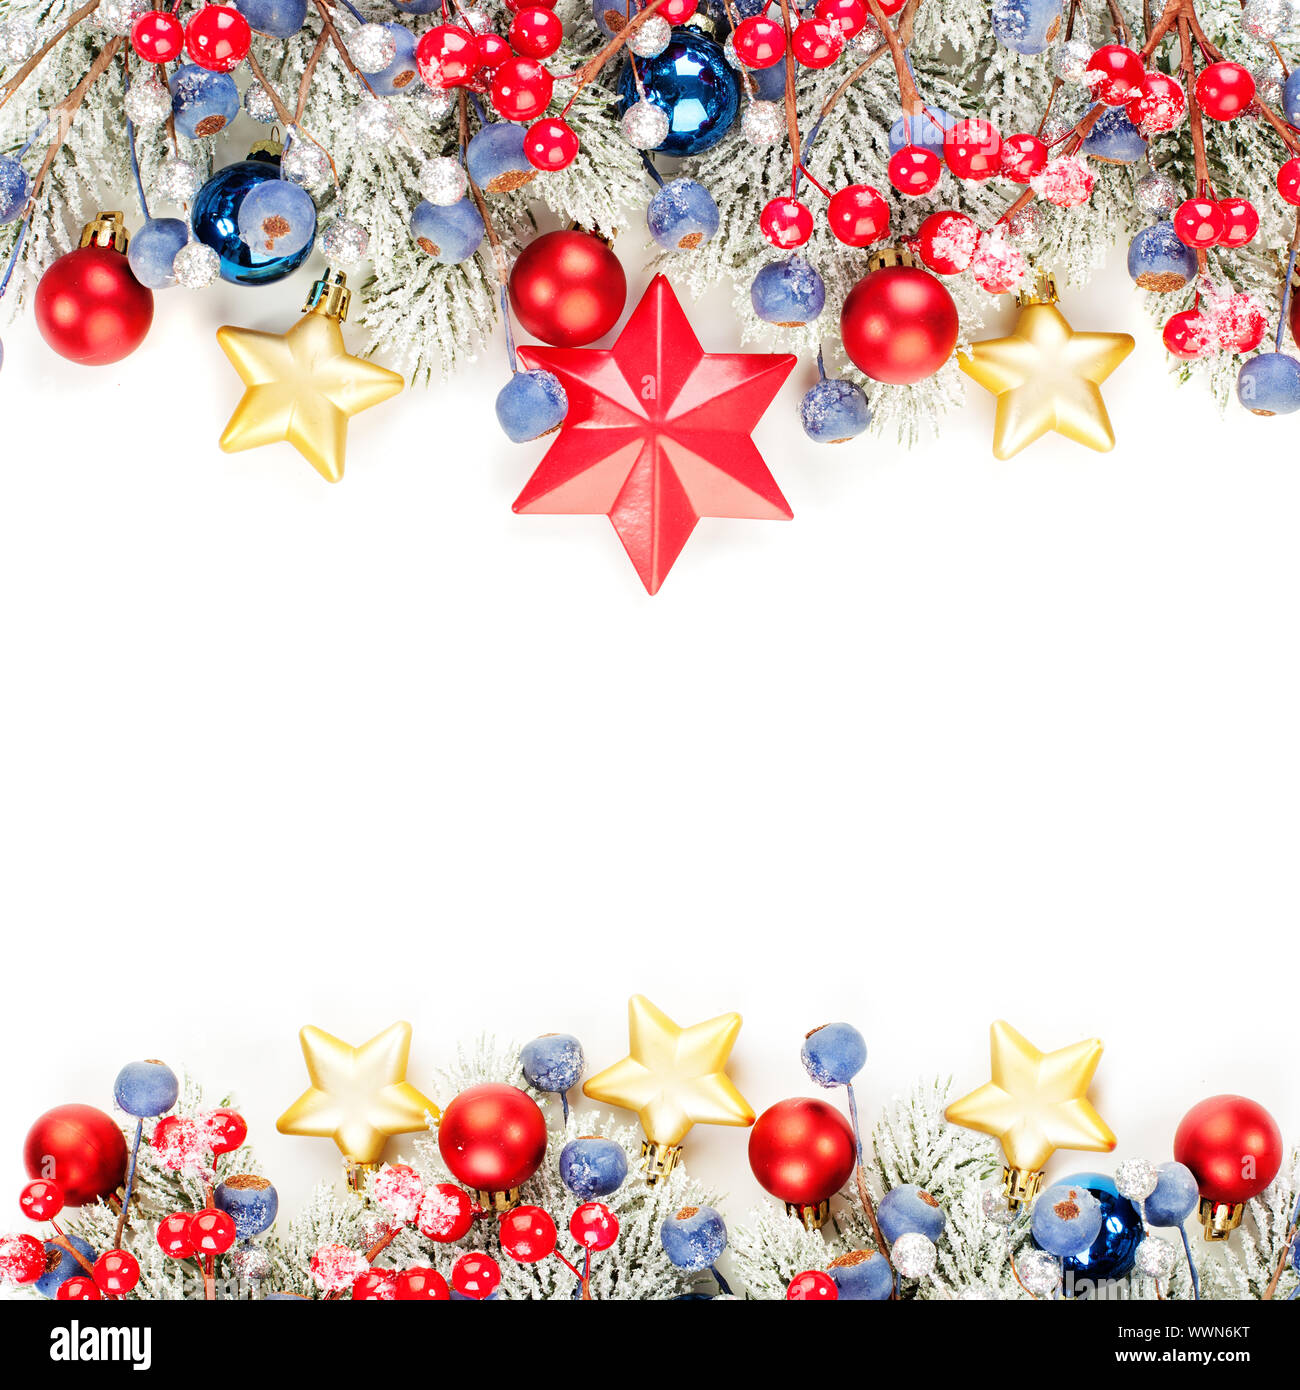 Fondo De Navidad Tarjeta  Foto gratis en Pixabay  Pixabay